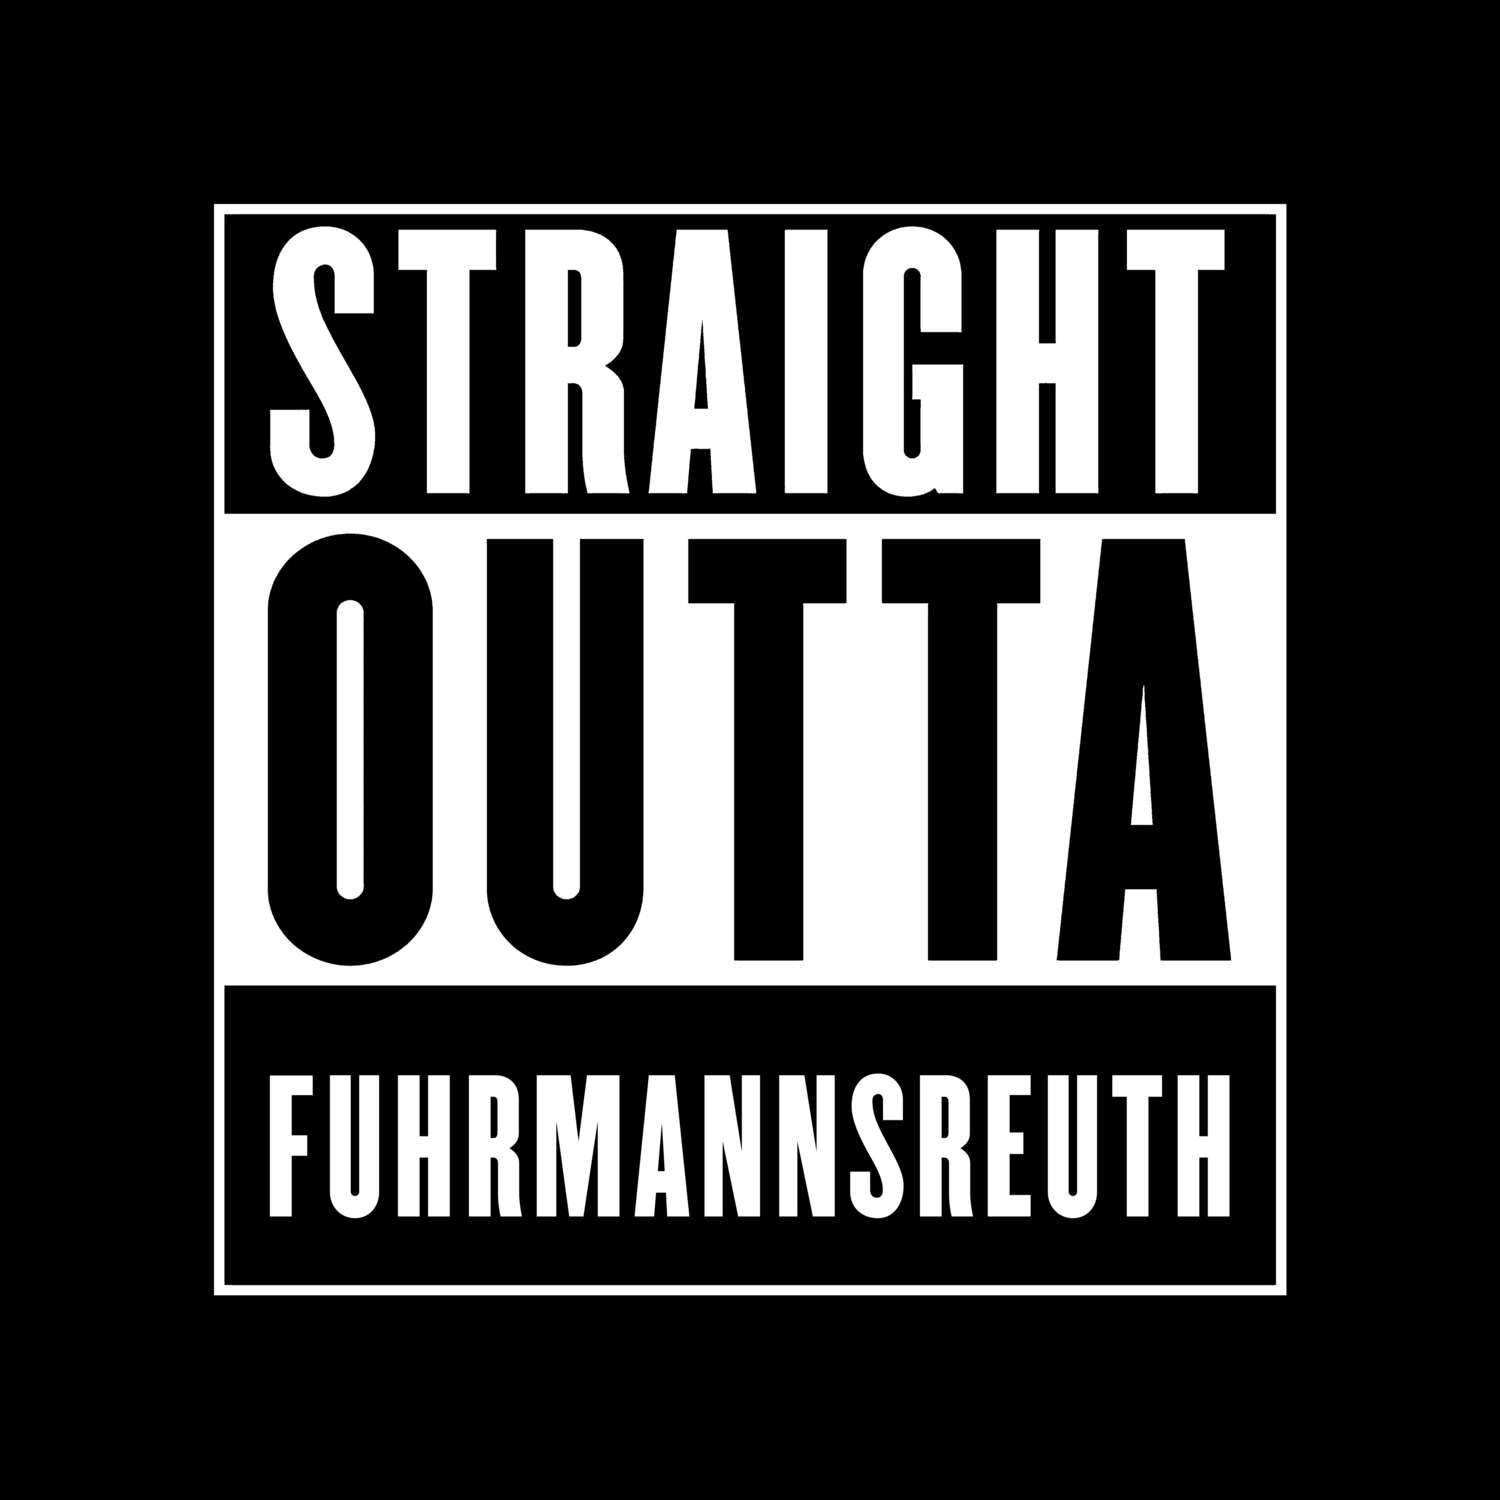 Fuhrmannsreuth T-Shirt »Straight Outta«